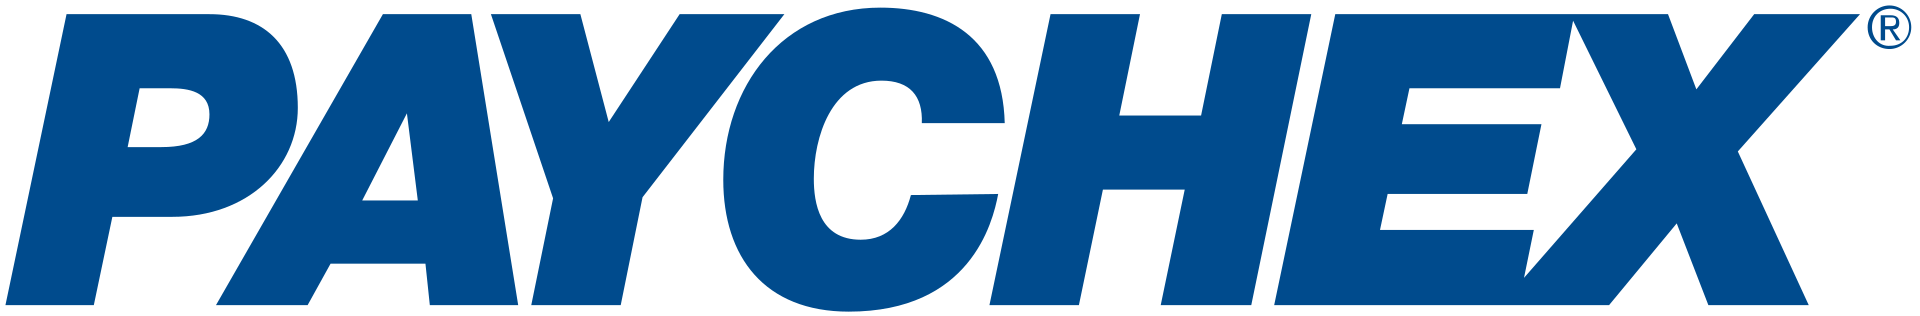 Paychex Brand Logo